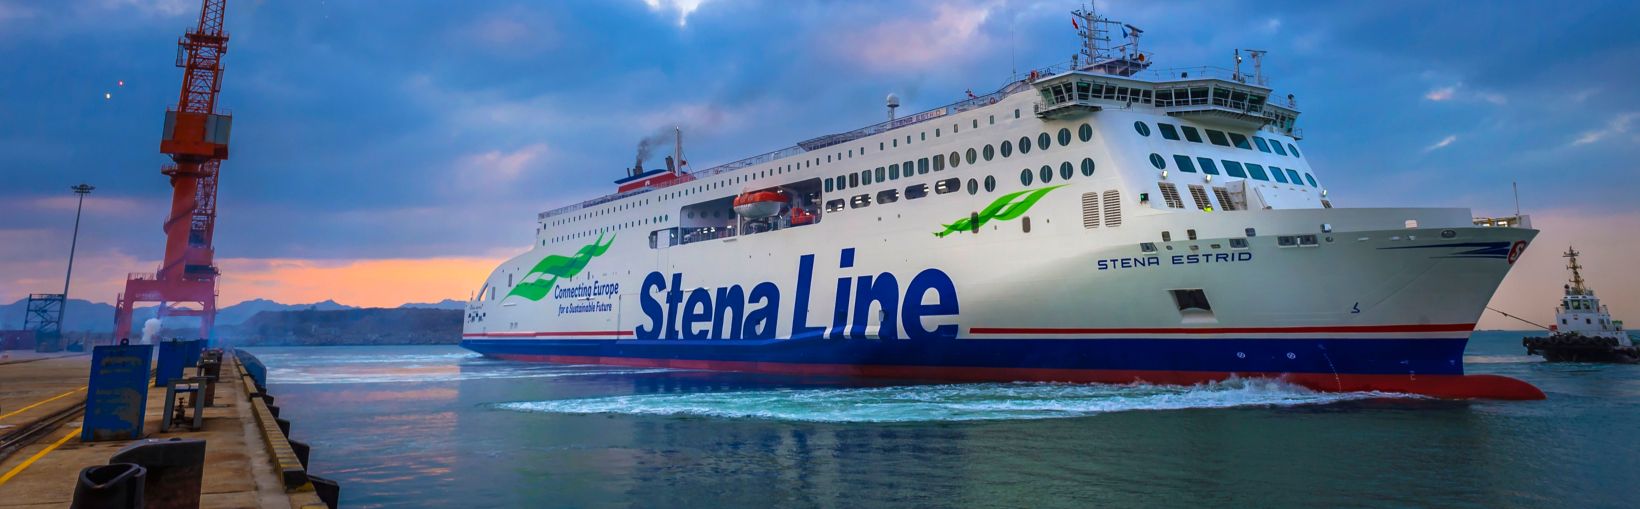 Stena Estridi parvlaev lahkub sadamast